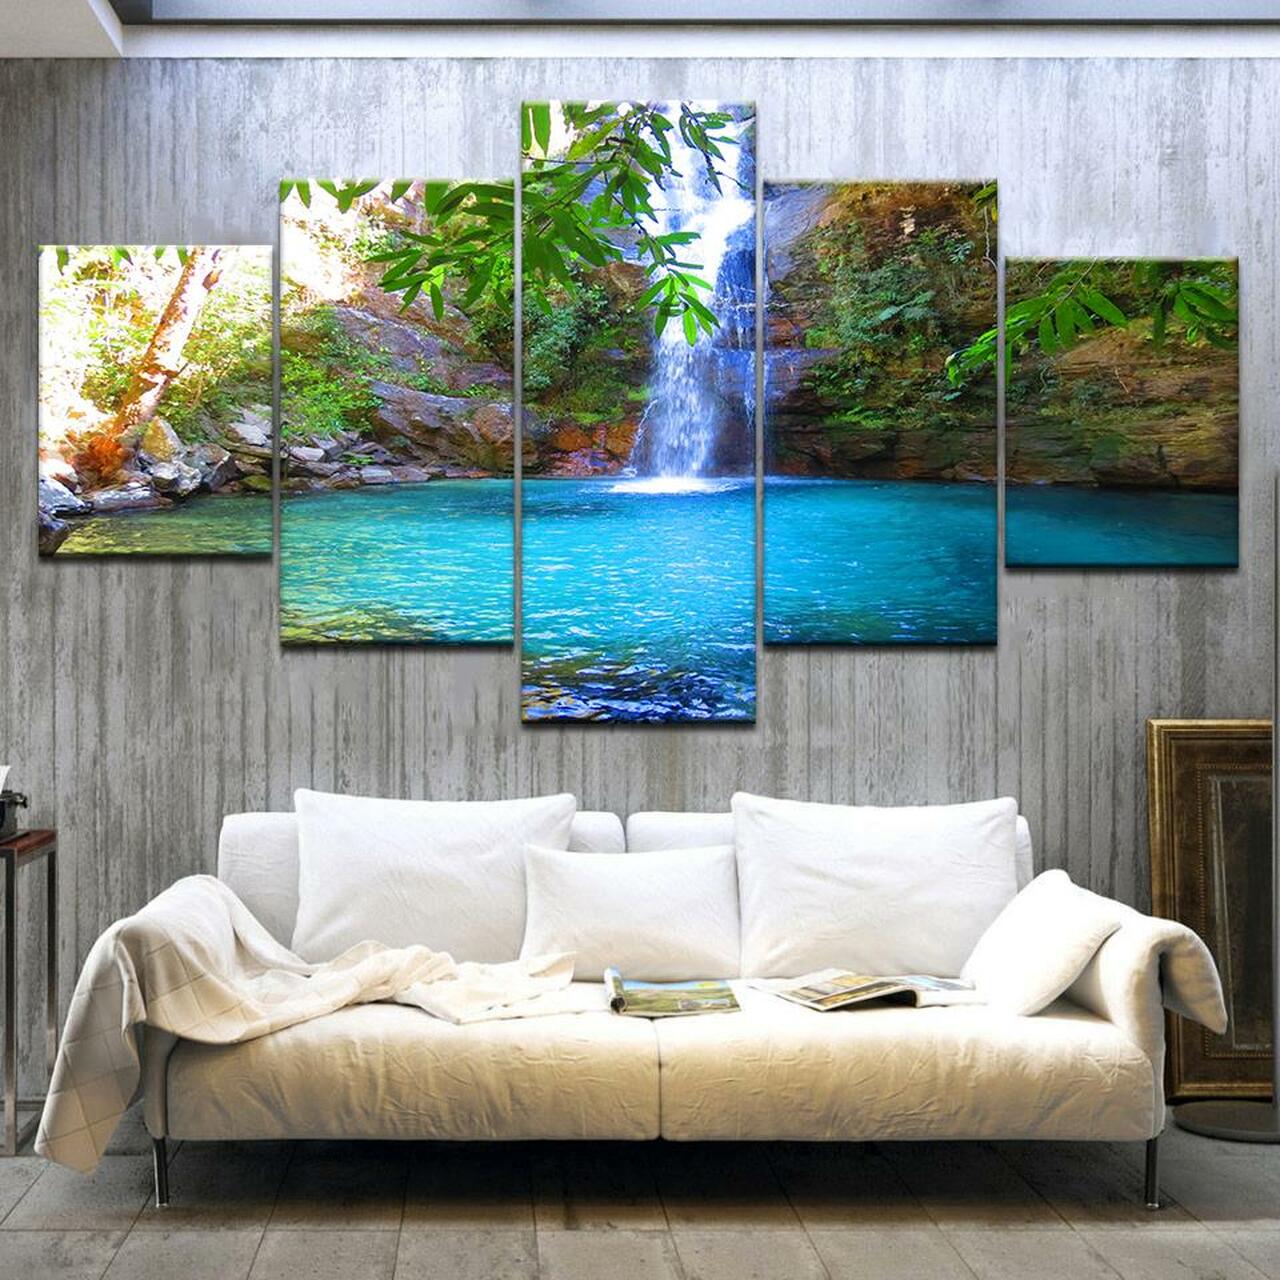 waterfall in lake 5 pices peinture sur toile impression sur toile toile art pour la dcoration intrieurekjfb5